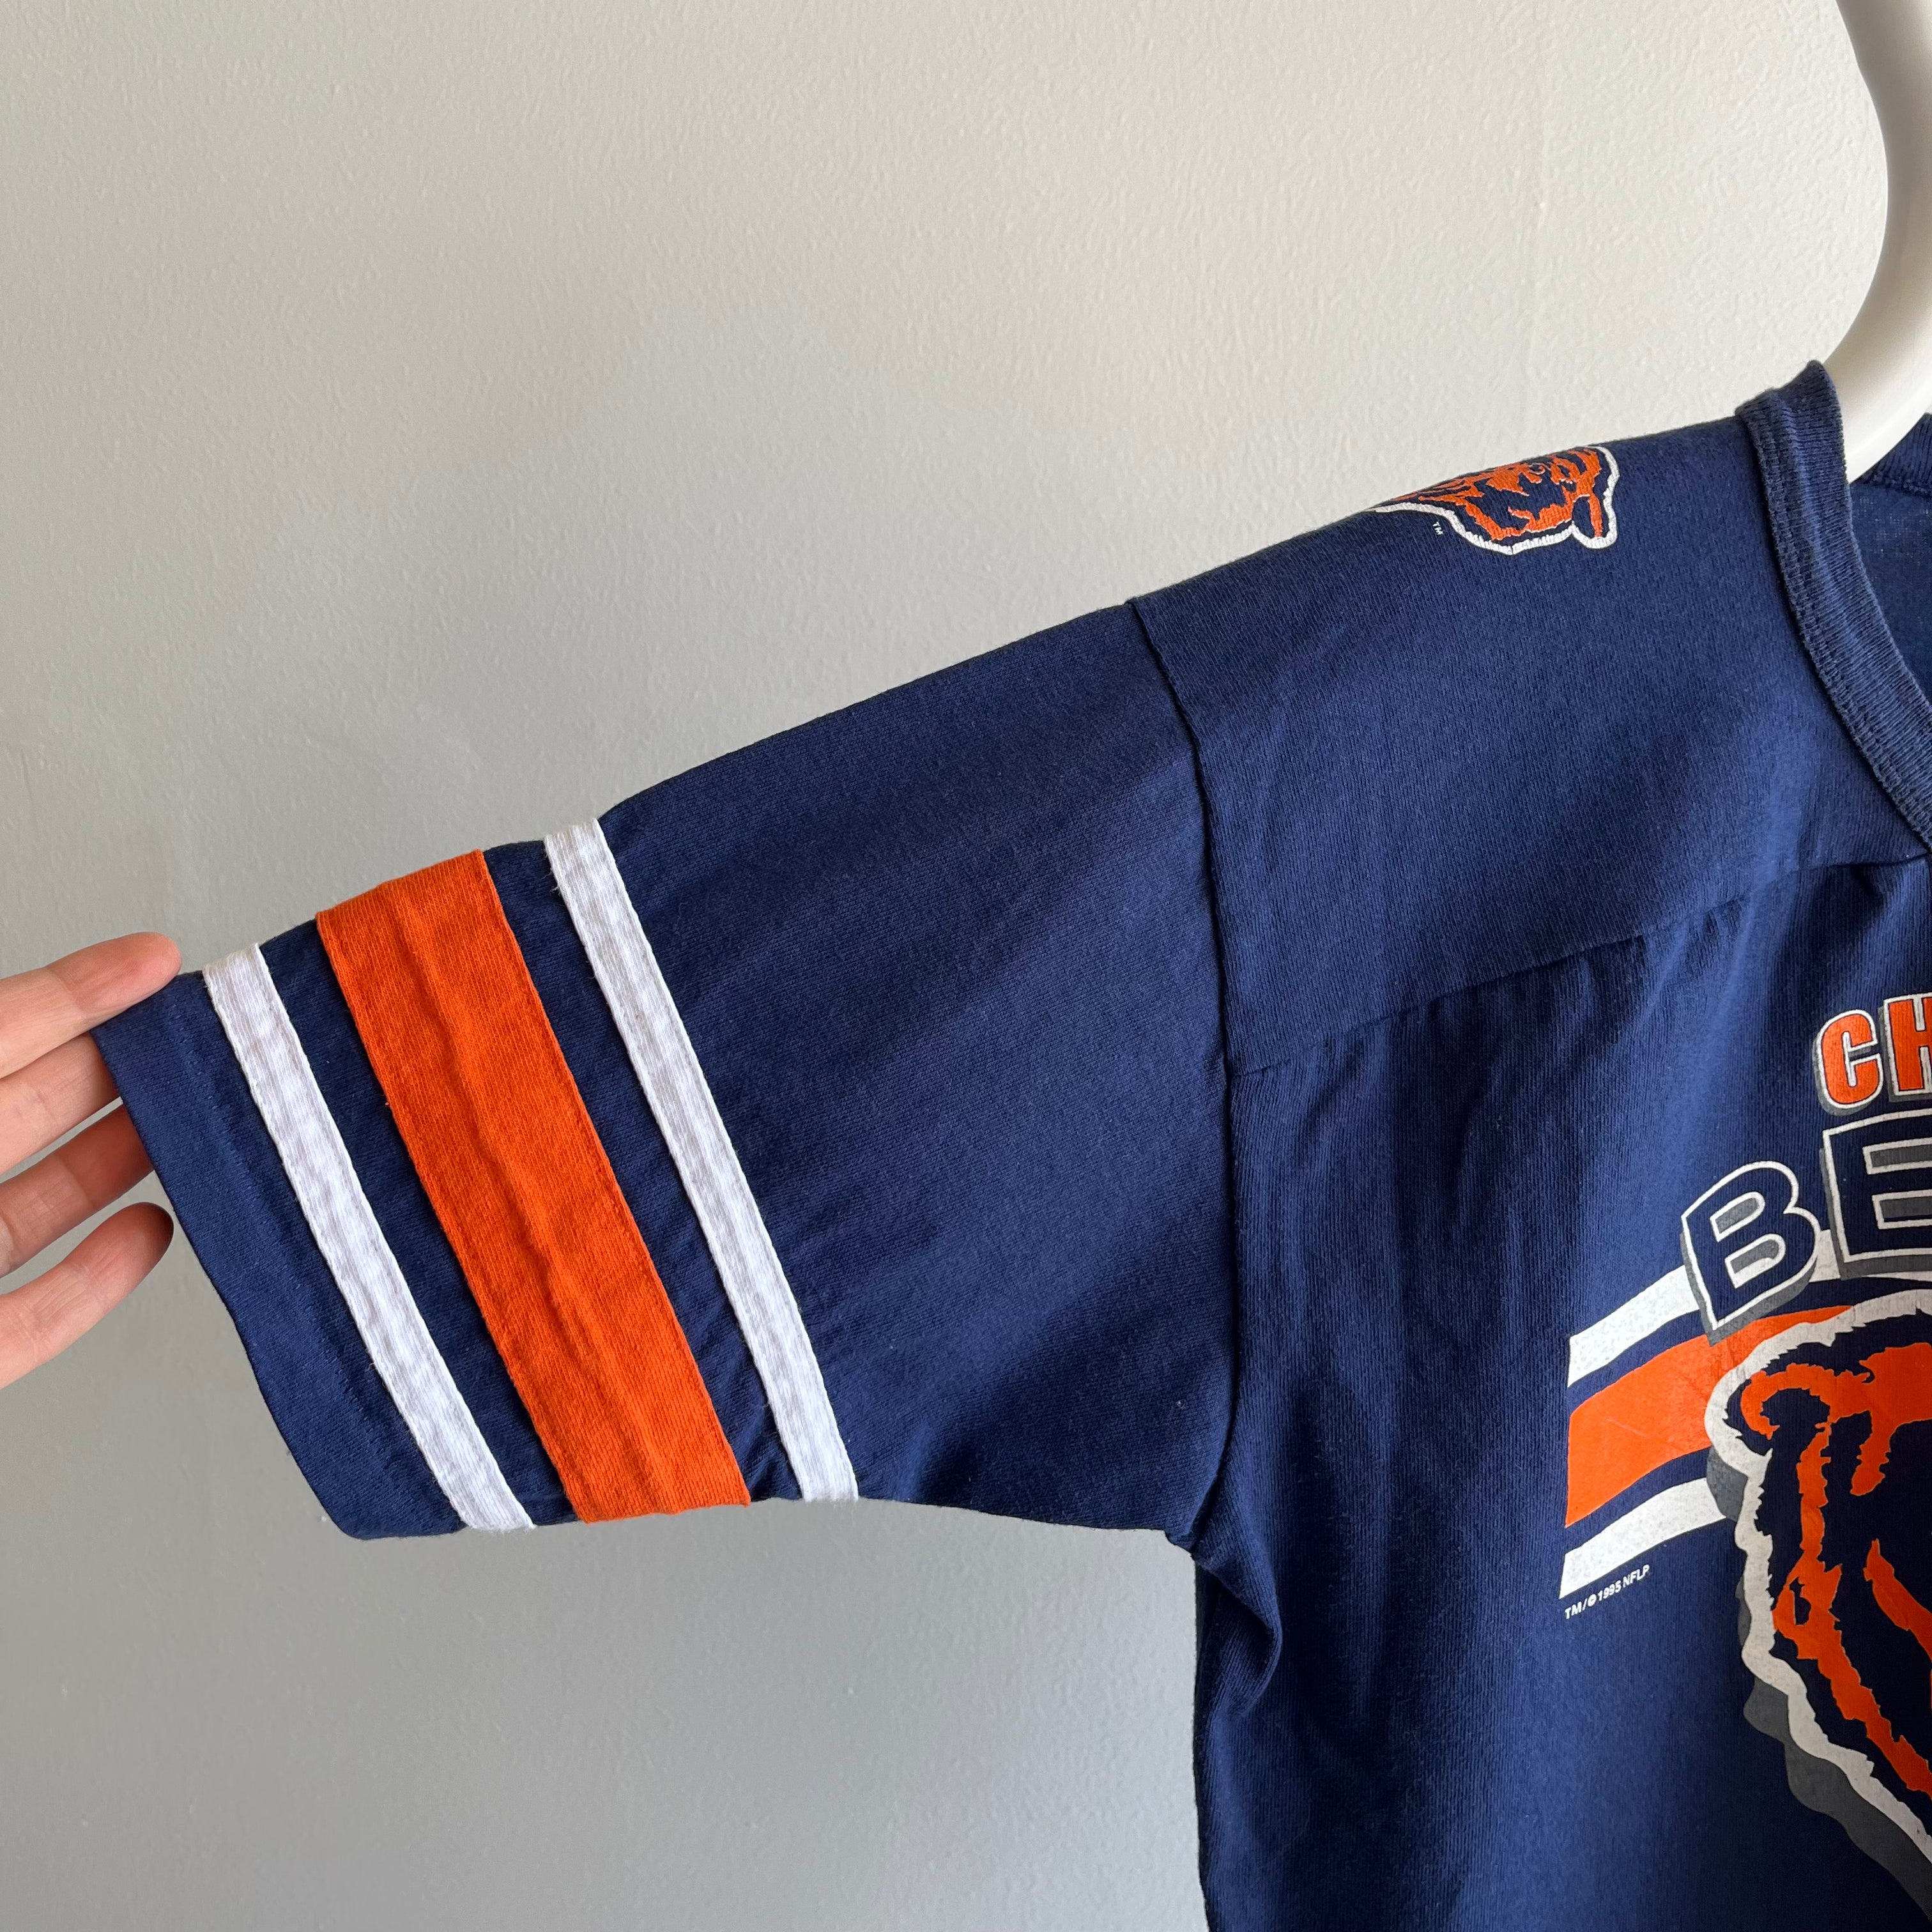 1995 Chicago Bears Football T-Shirt